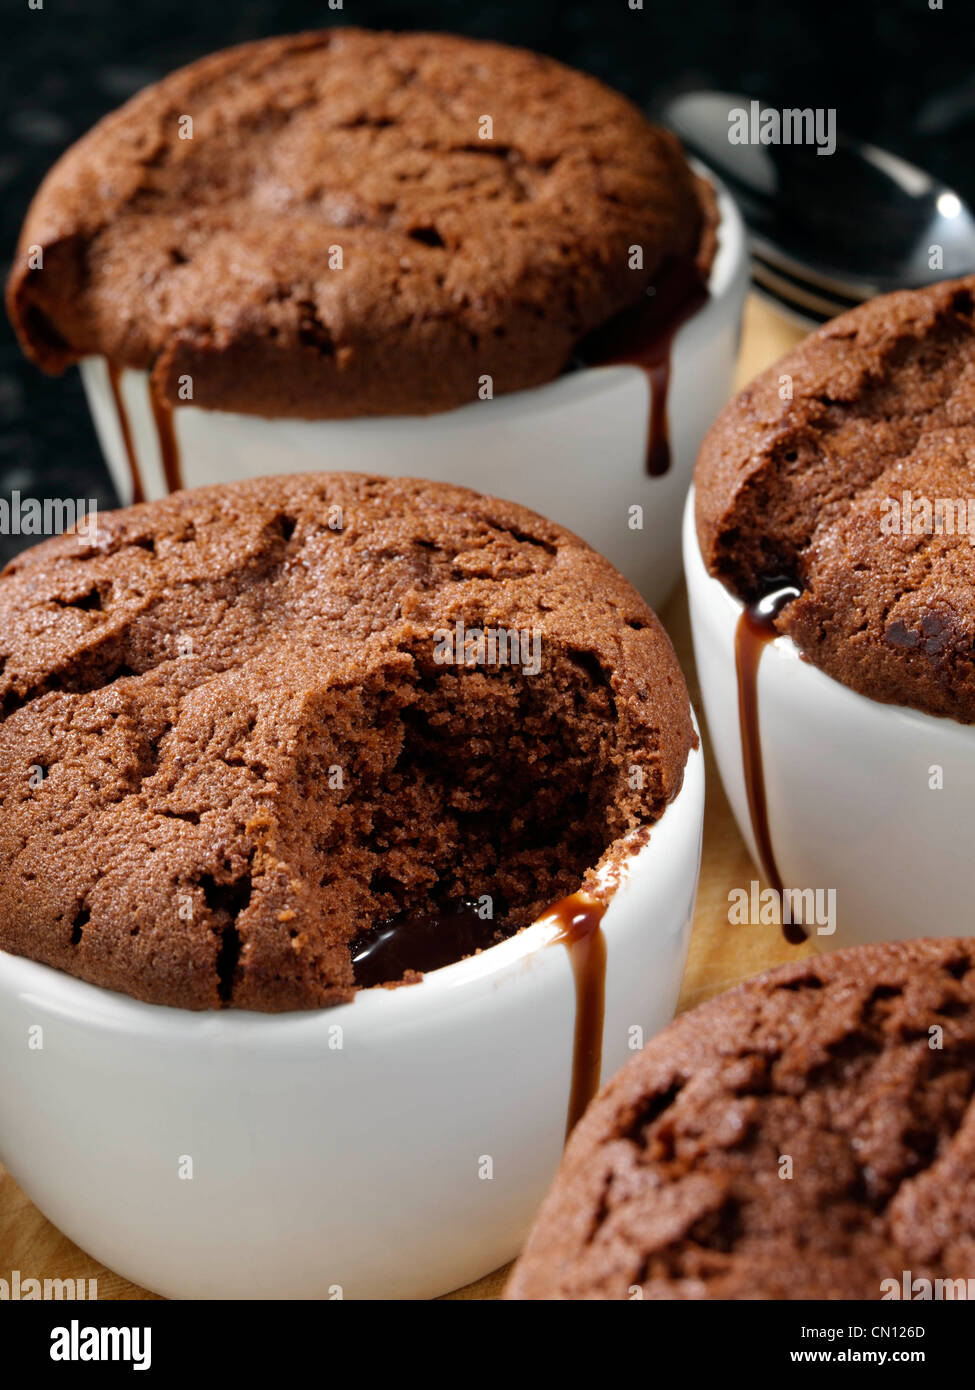 Saucy chocolate pudding indulgent dessert Stock Photo